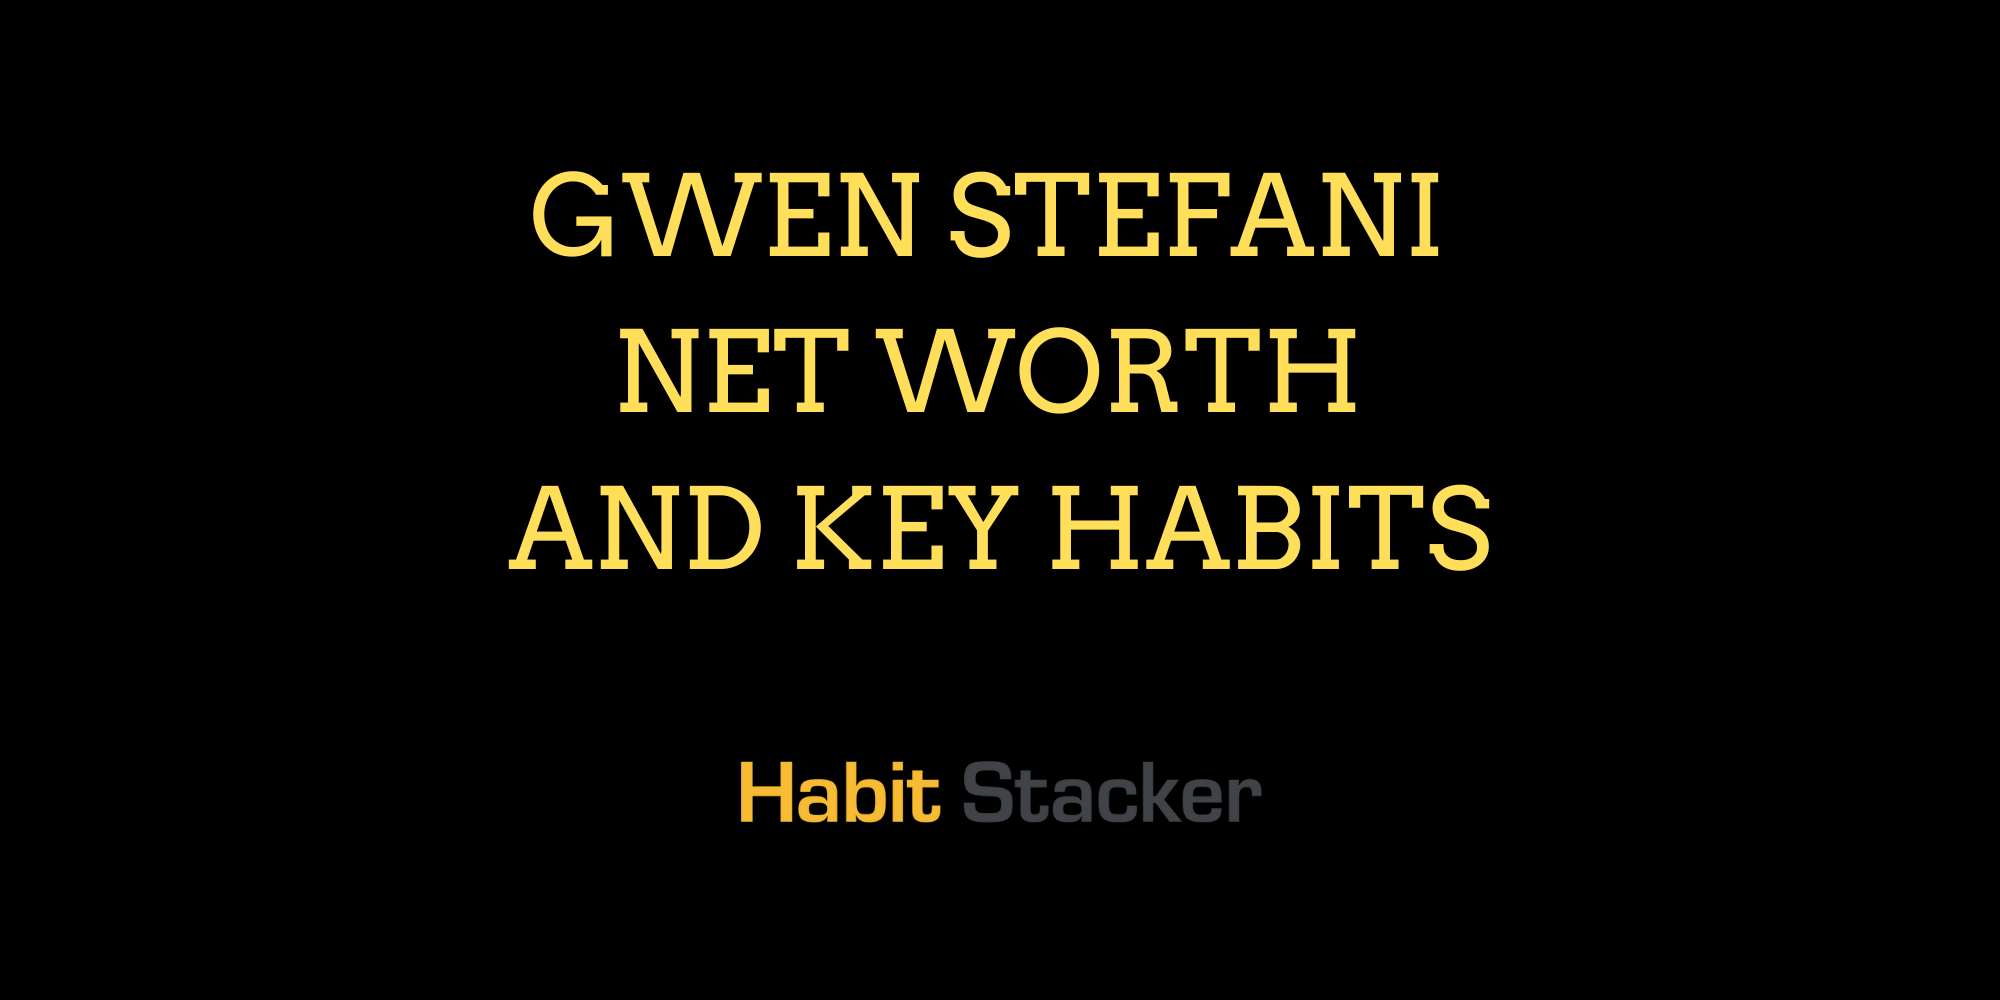 Gwen Stefani Net worth and Key Habits